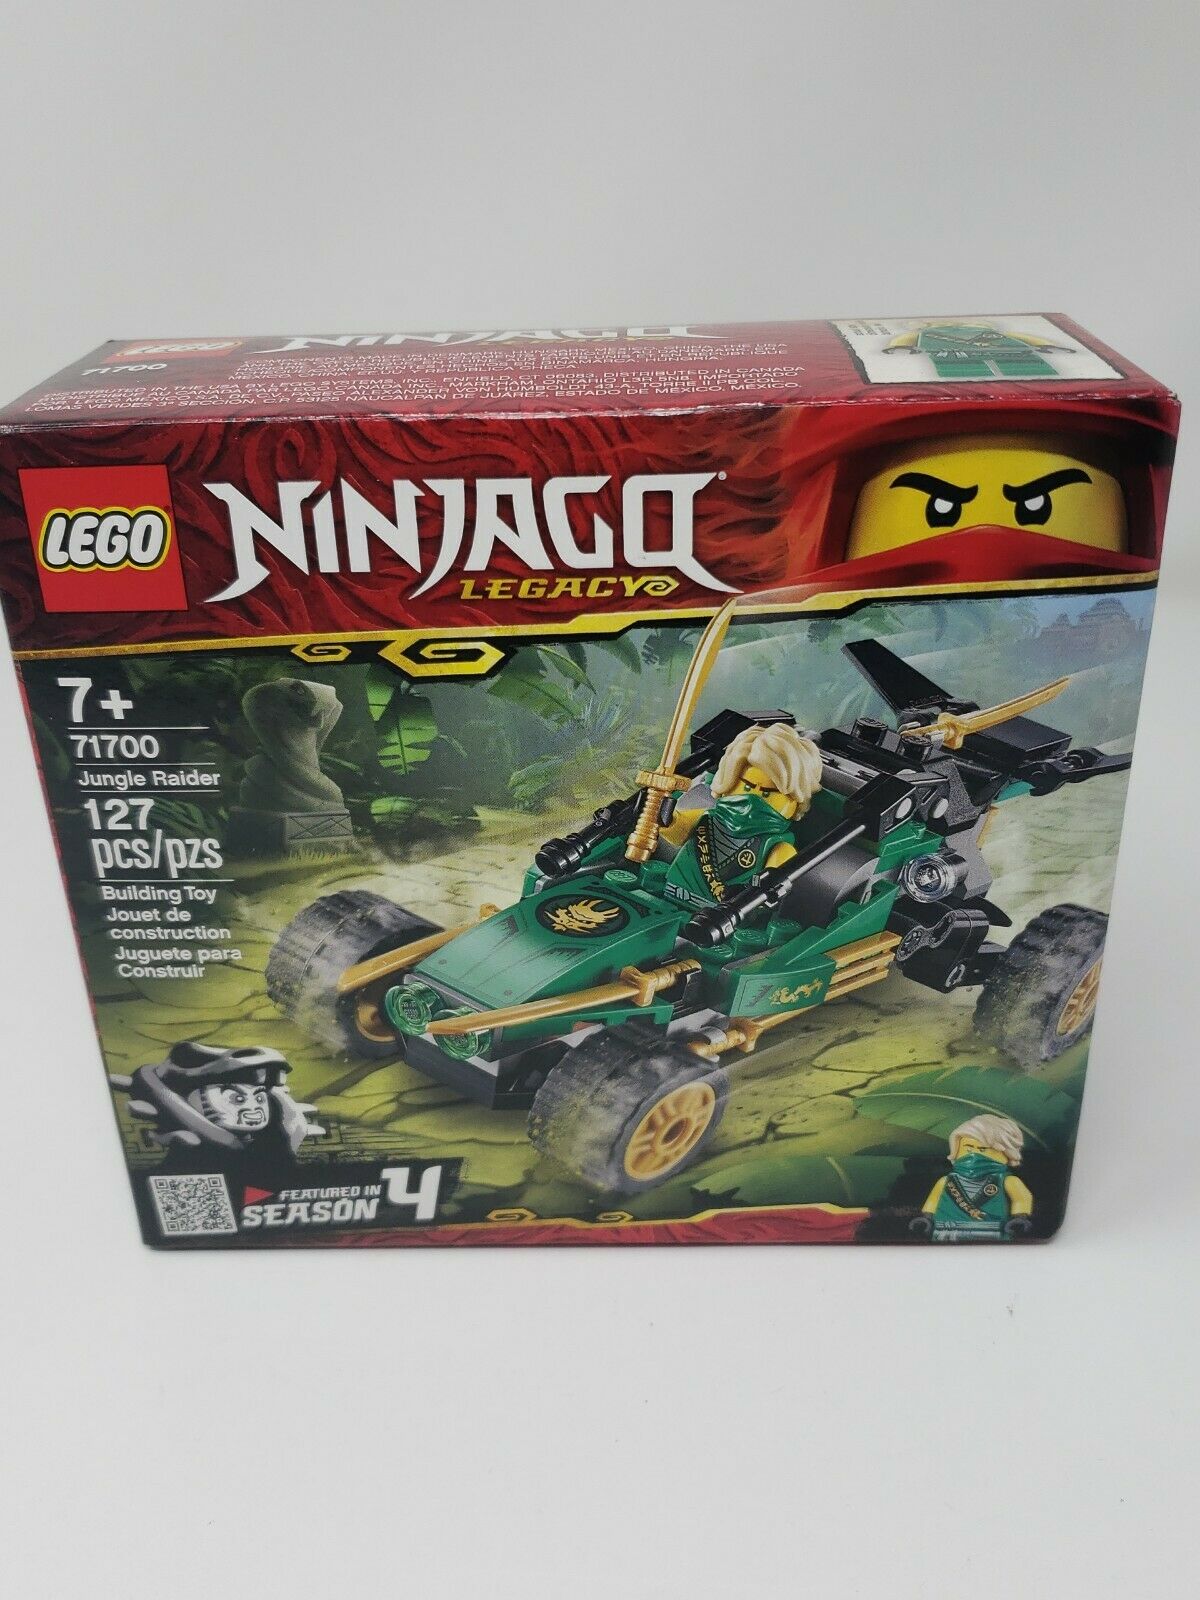 Lego Ninjago Legacy Jungle Raider (71700) 127 Pcs Free Shipping New